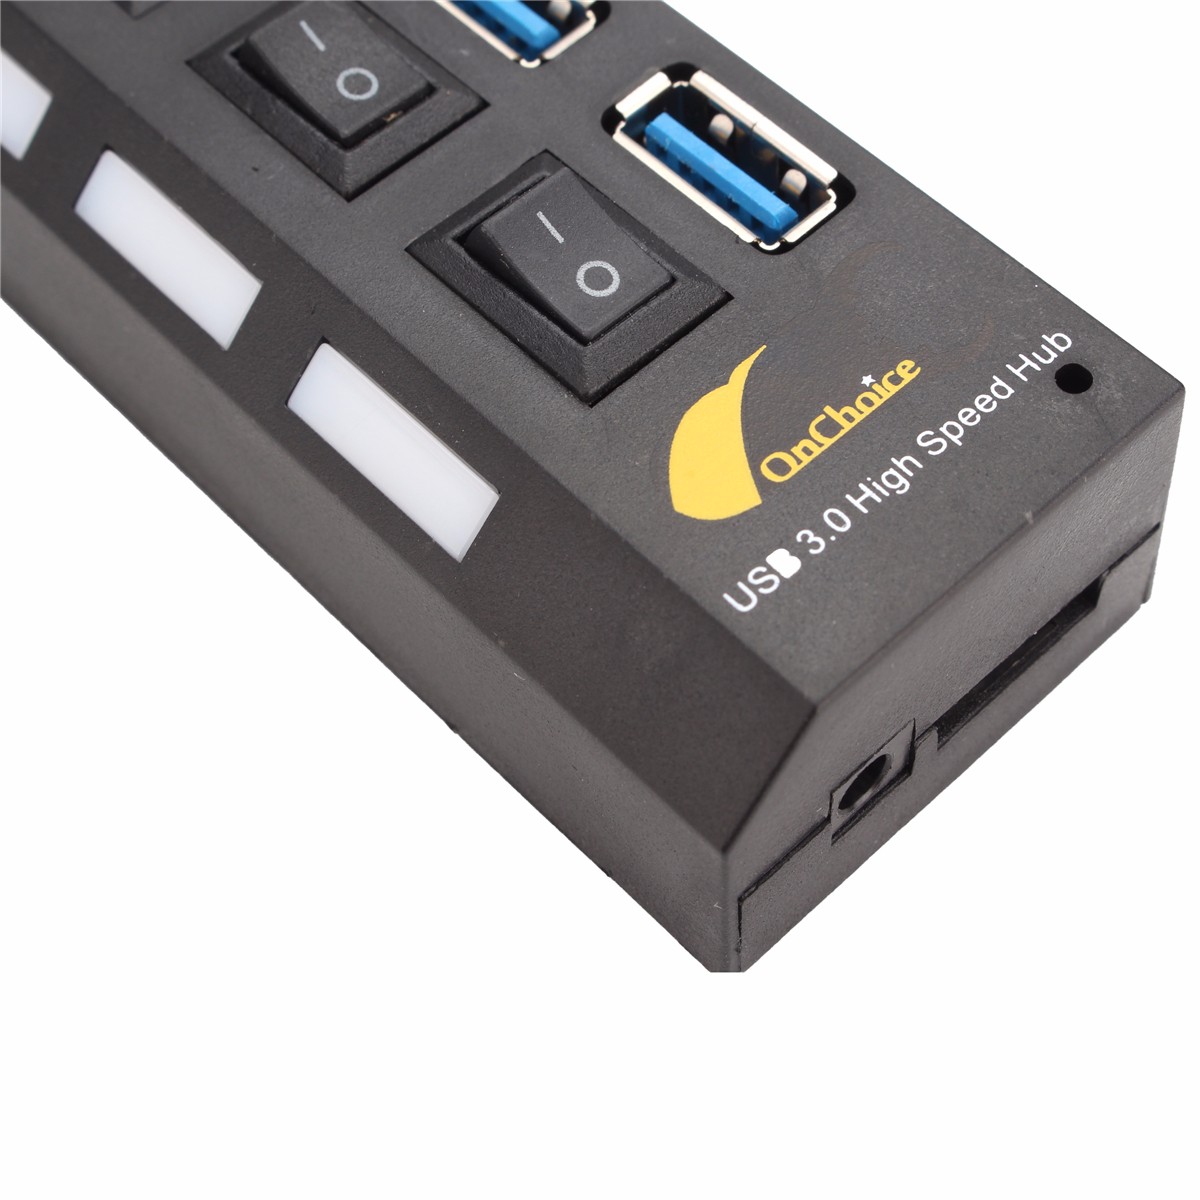 ONCHOICE 7Port USB 3.0 Hub On/Off Switch EU US UK AC Power Adapter For Laptop Desktop 42